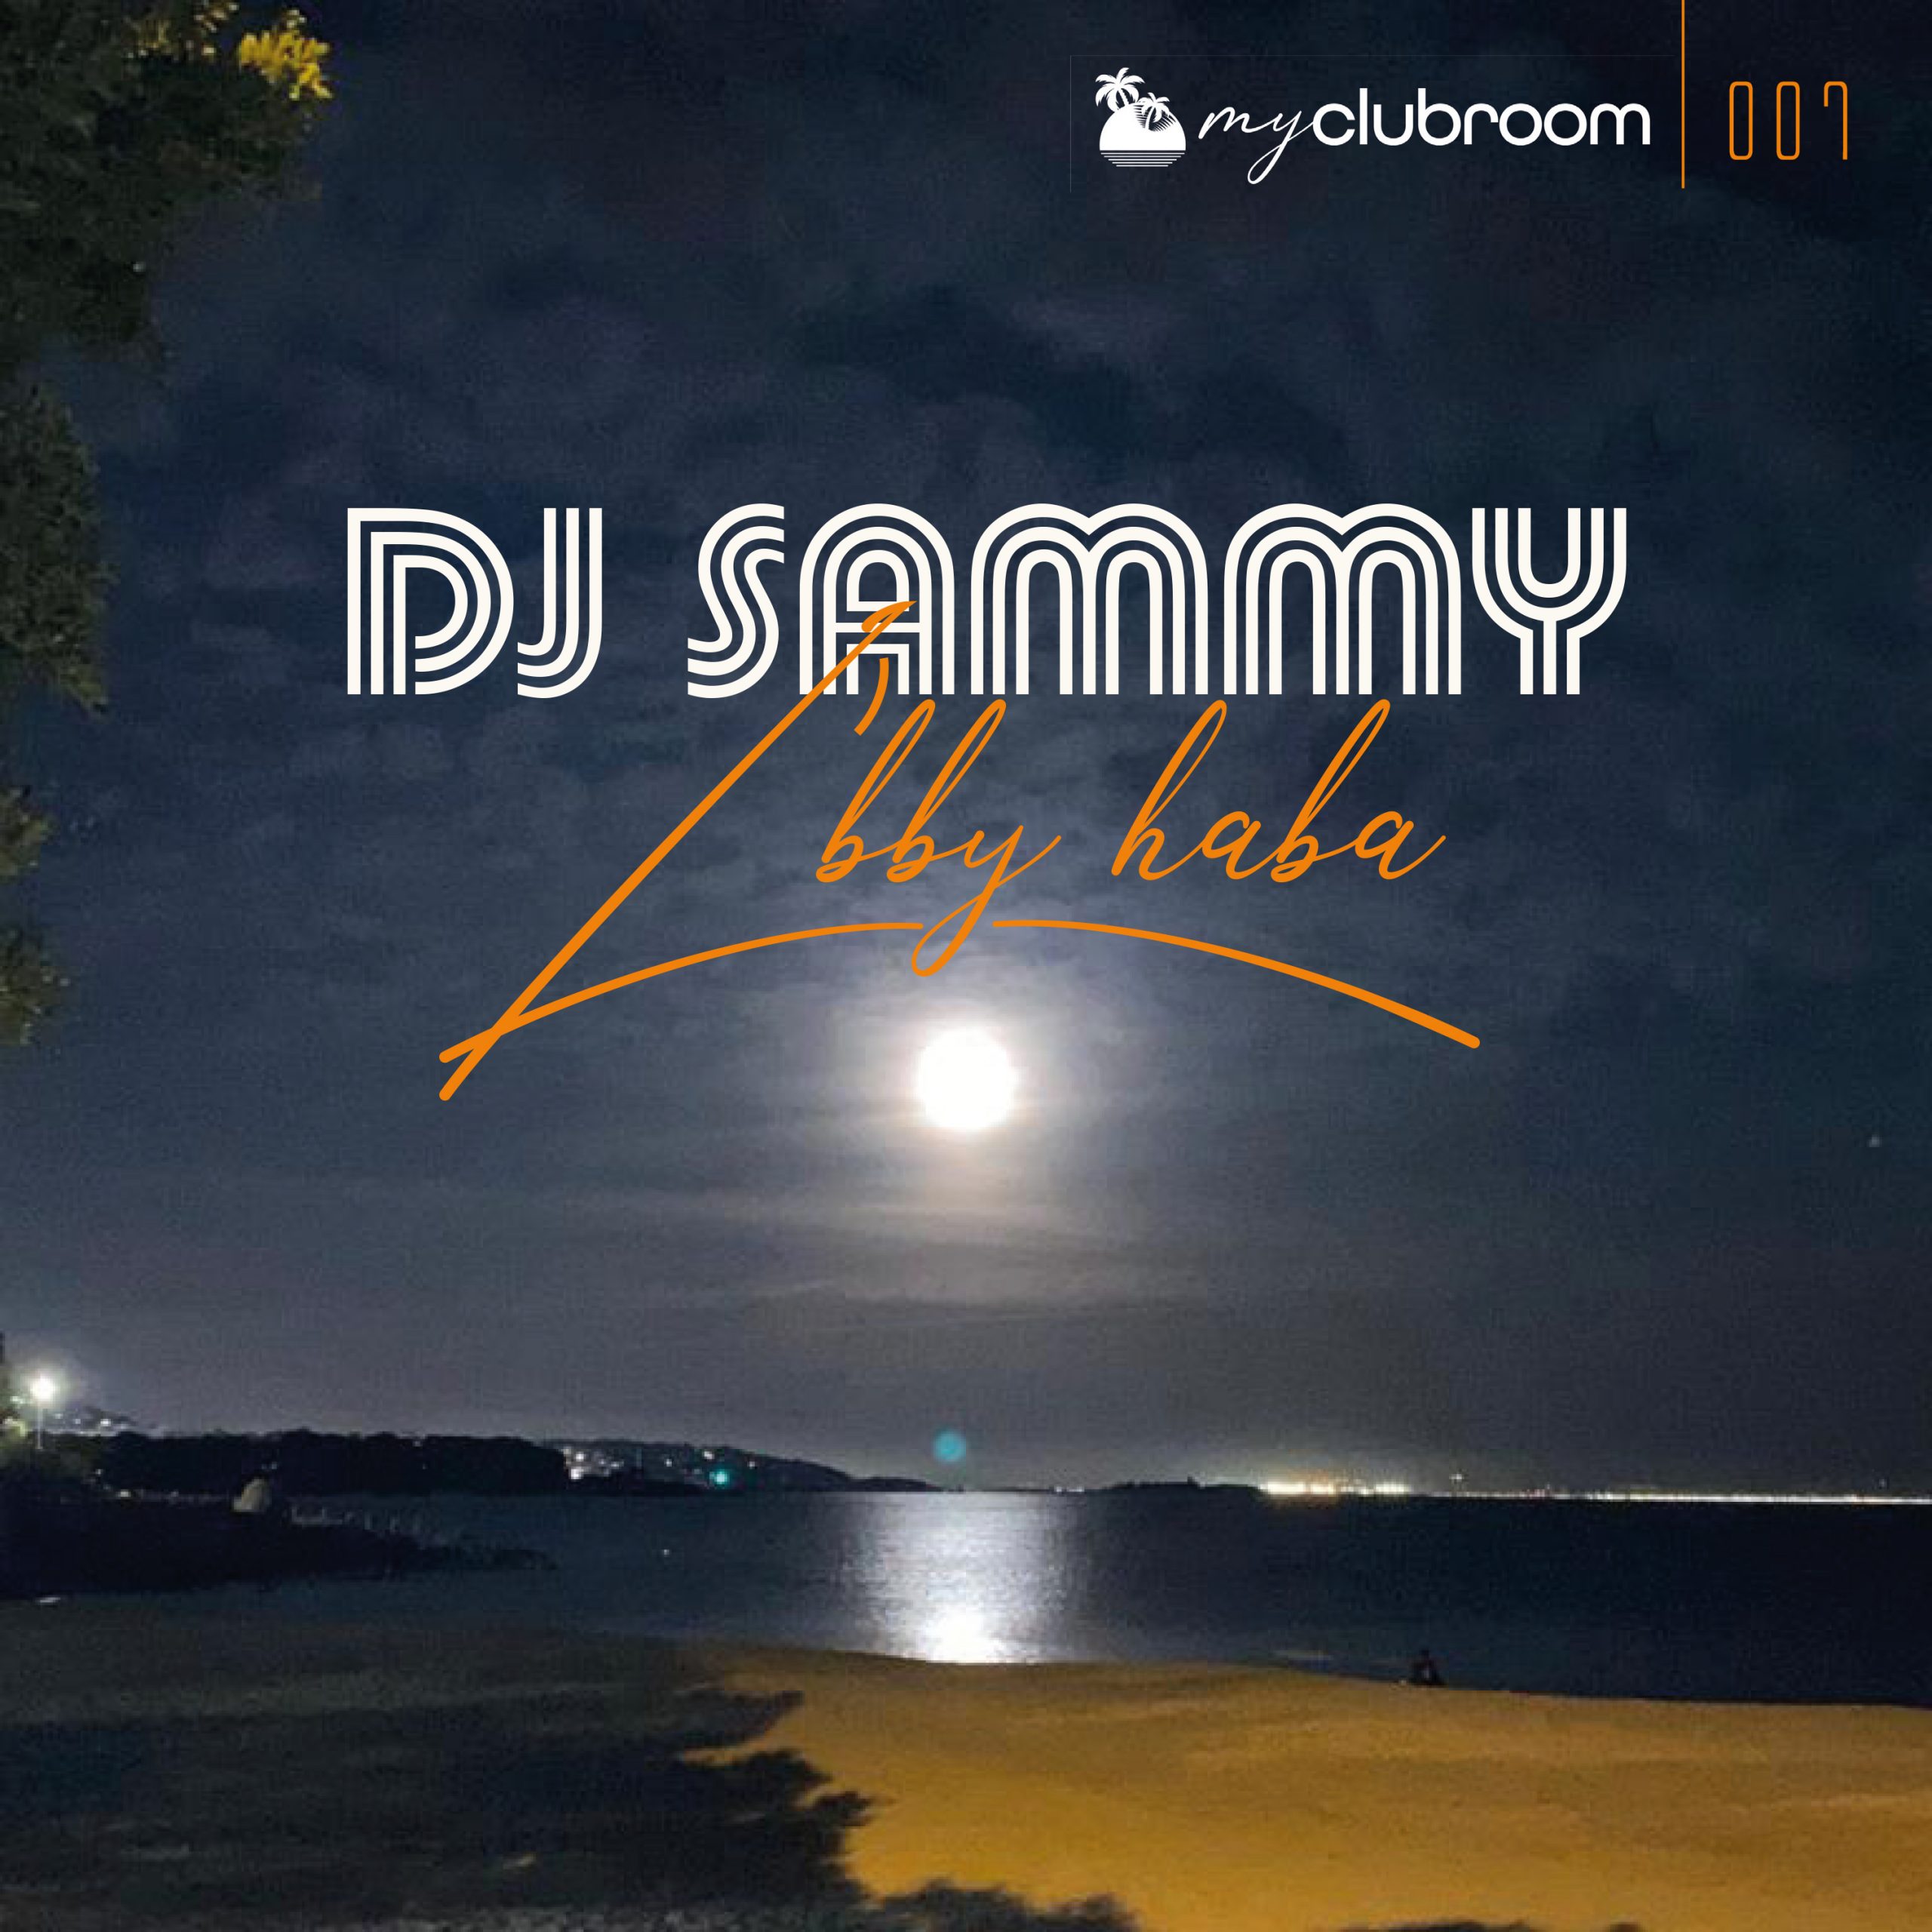 DJ Sammy_lbby haba